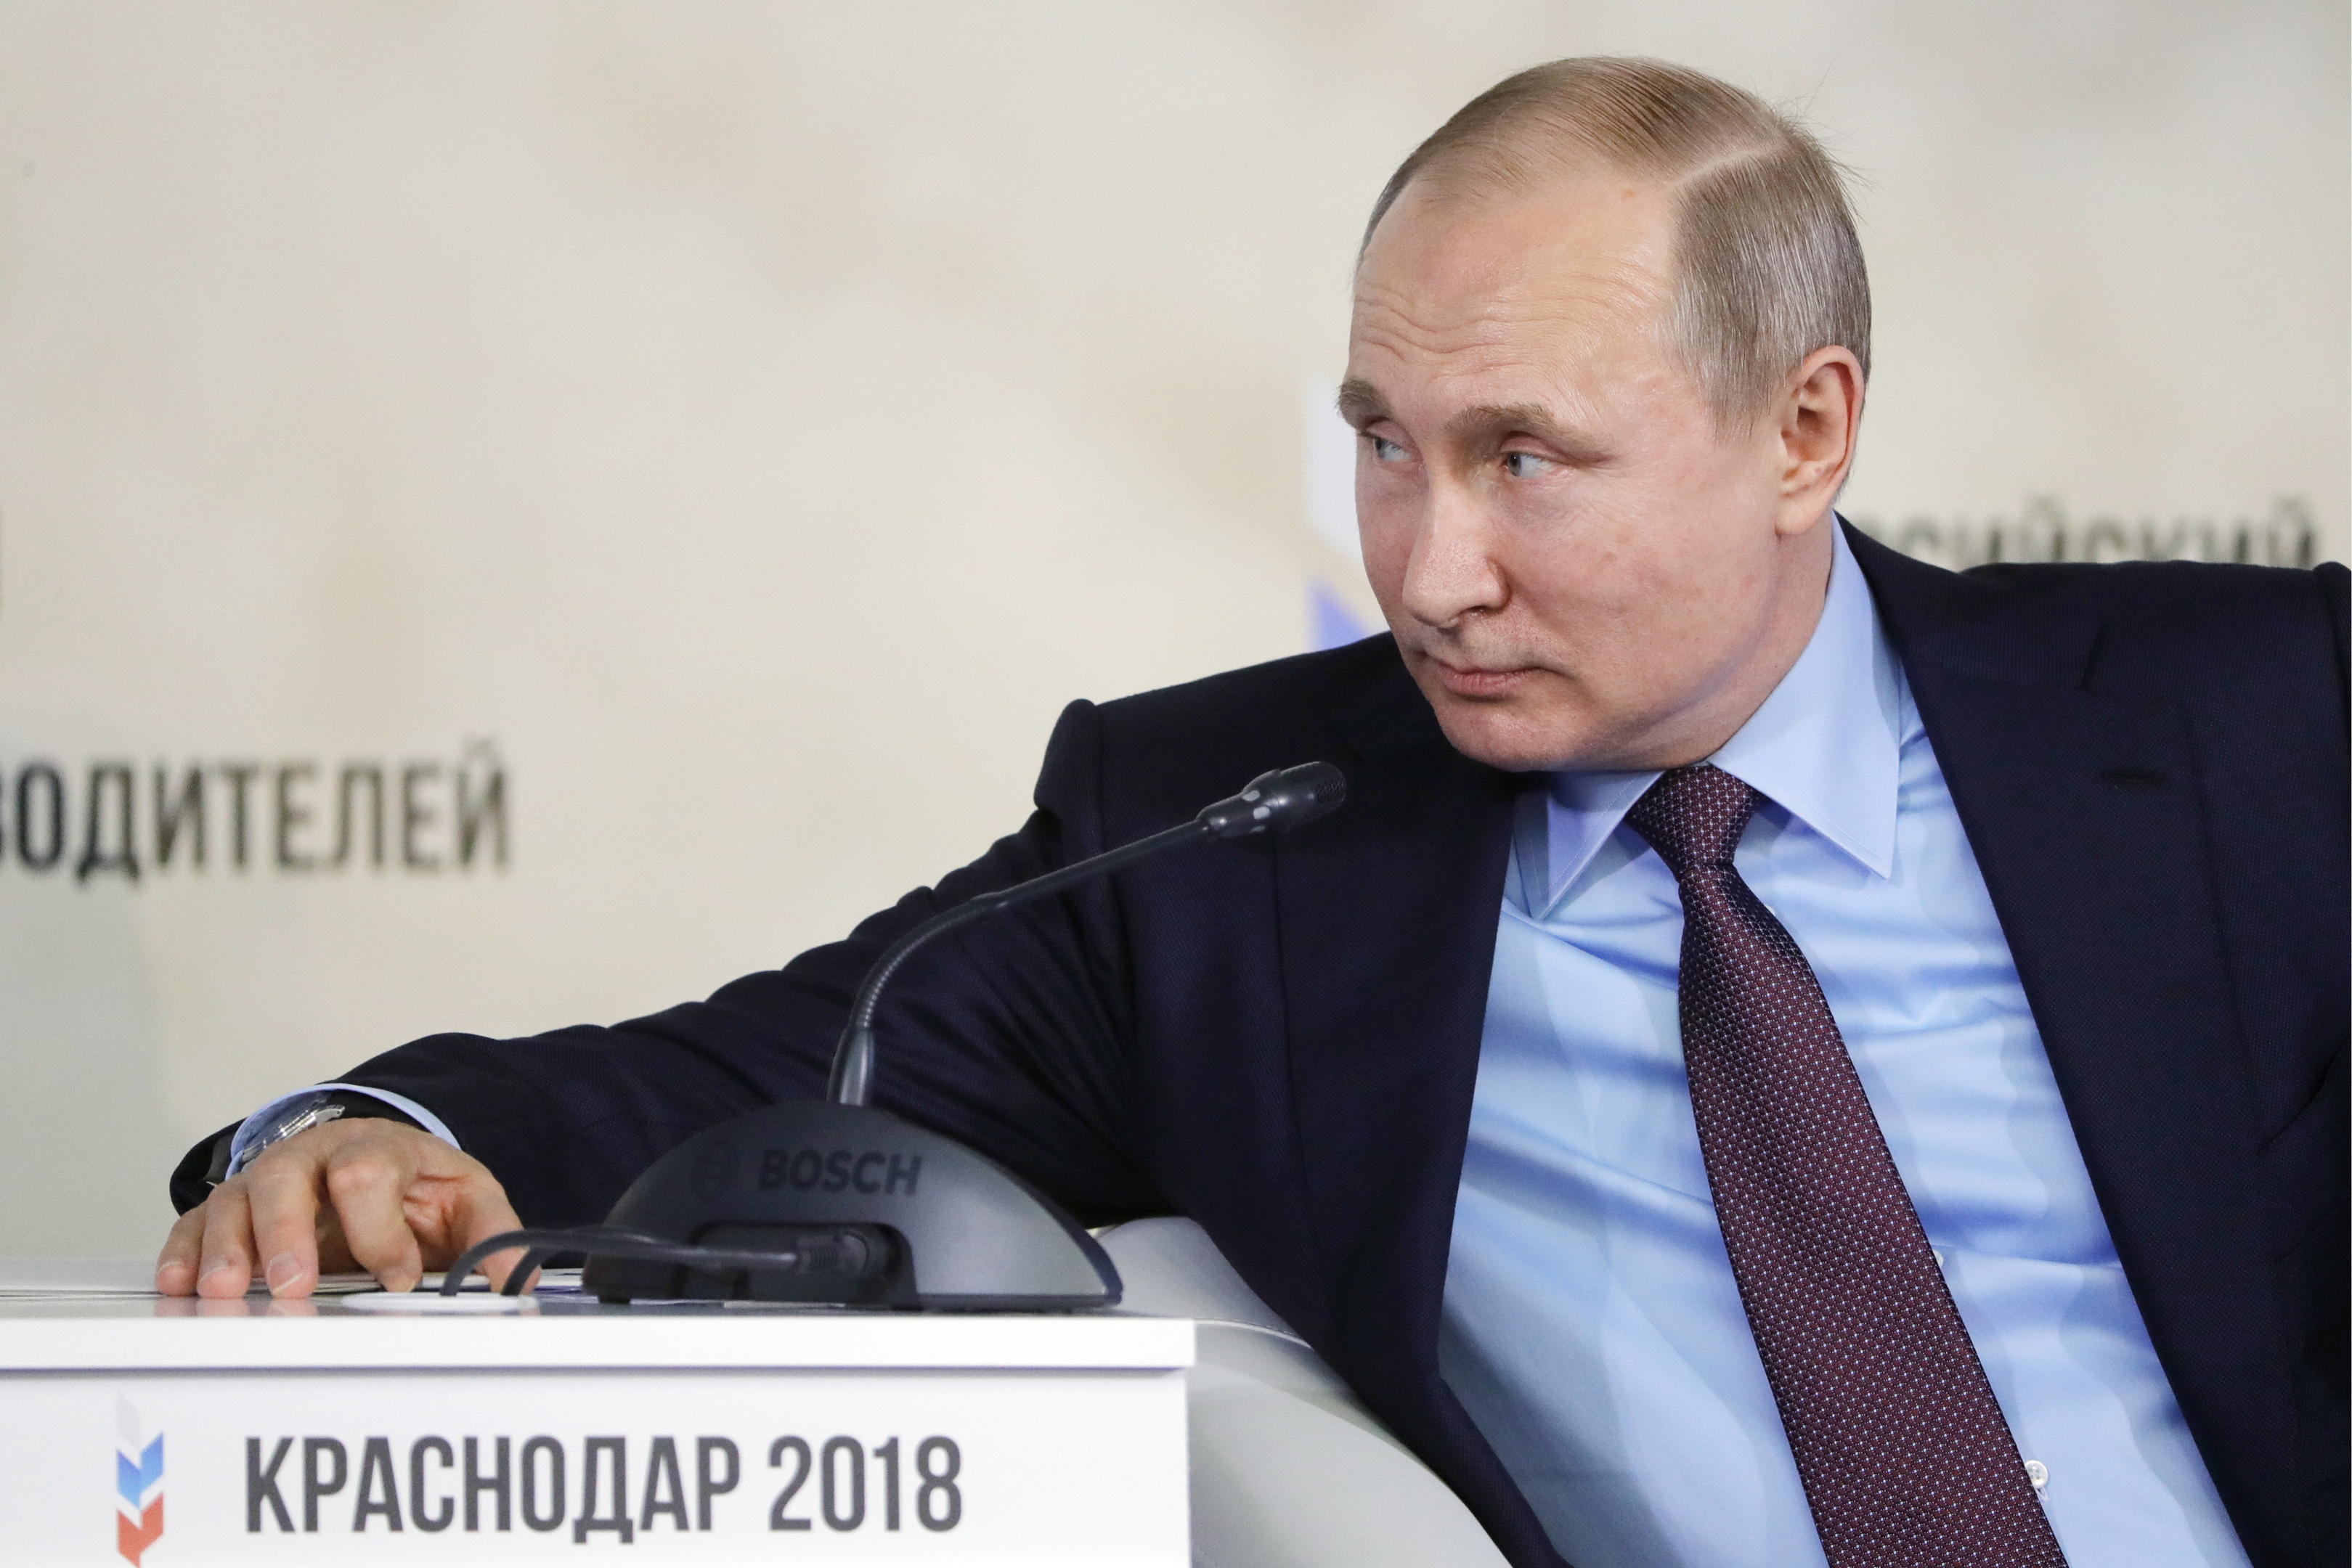 Russia's President Vladimir Putin (Mikhail Metzel/TASS via Getty Images)